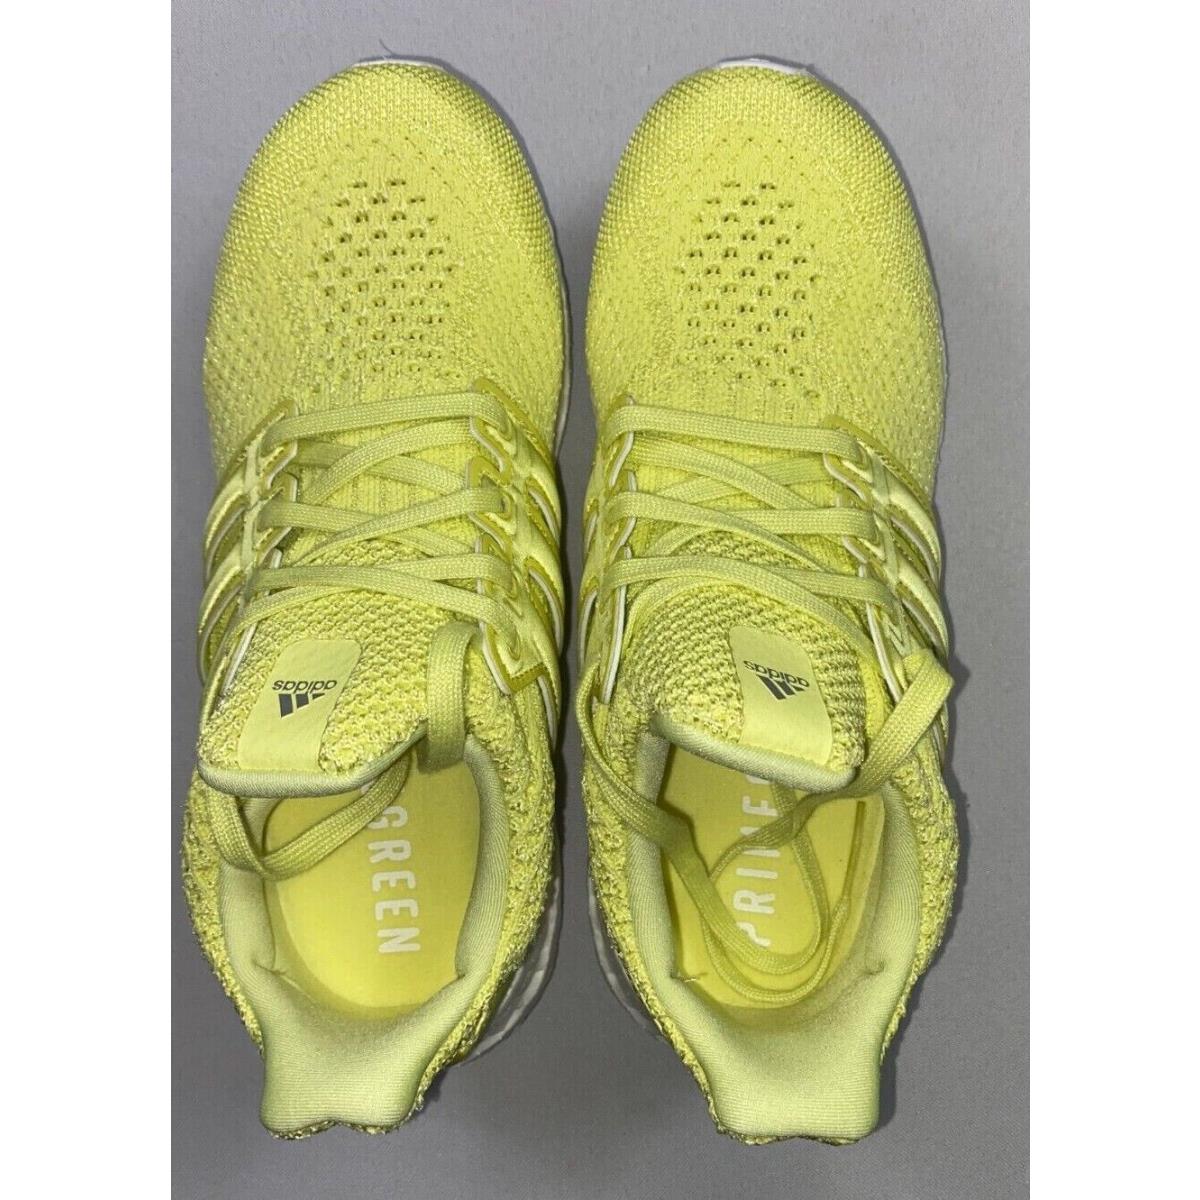 Adidas shoes UltraBoost - Green 1